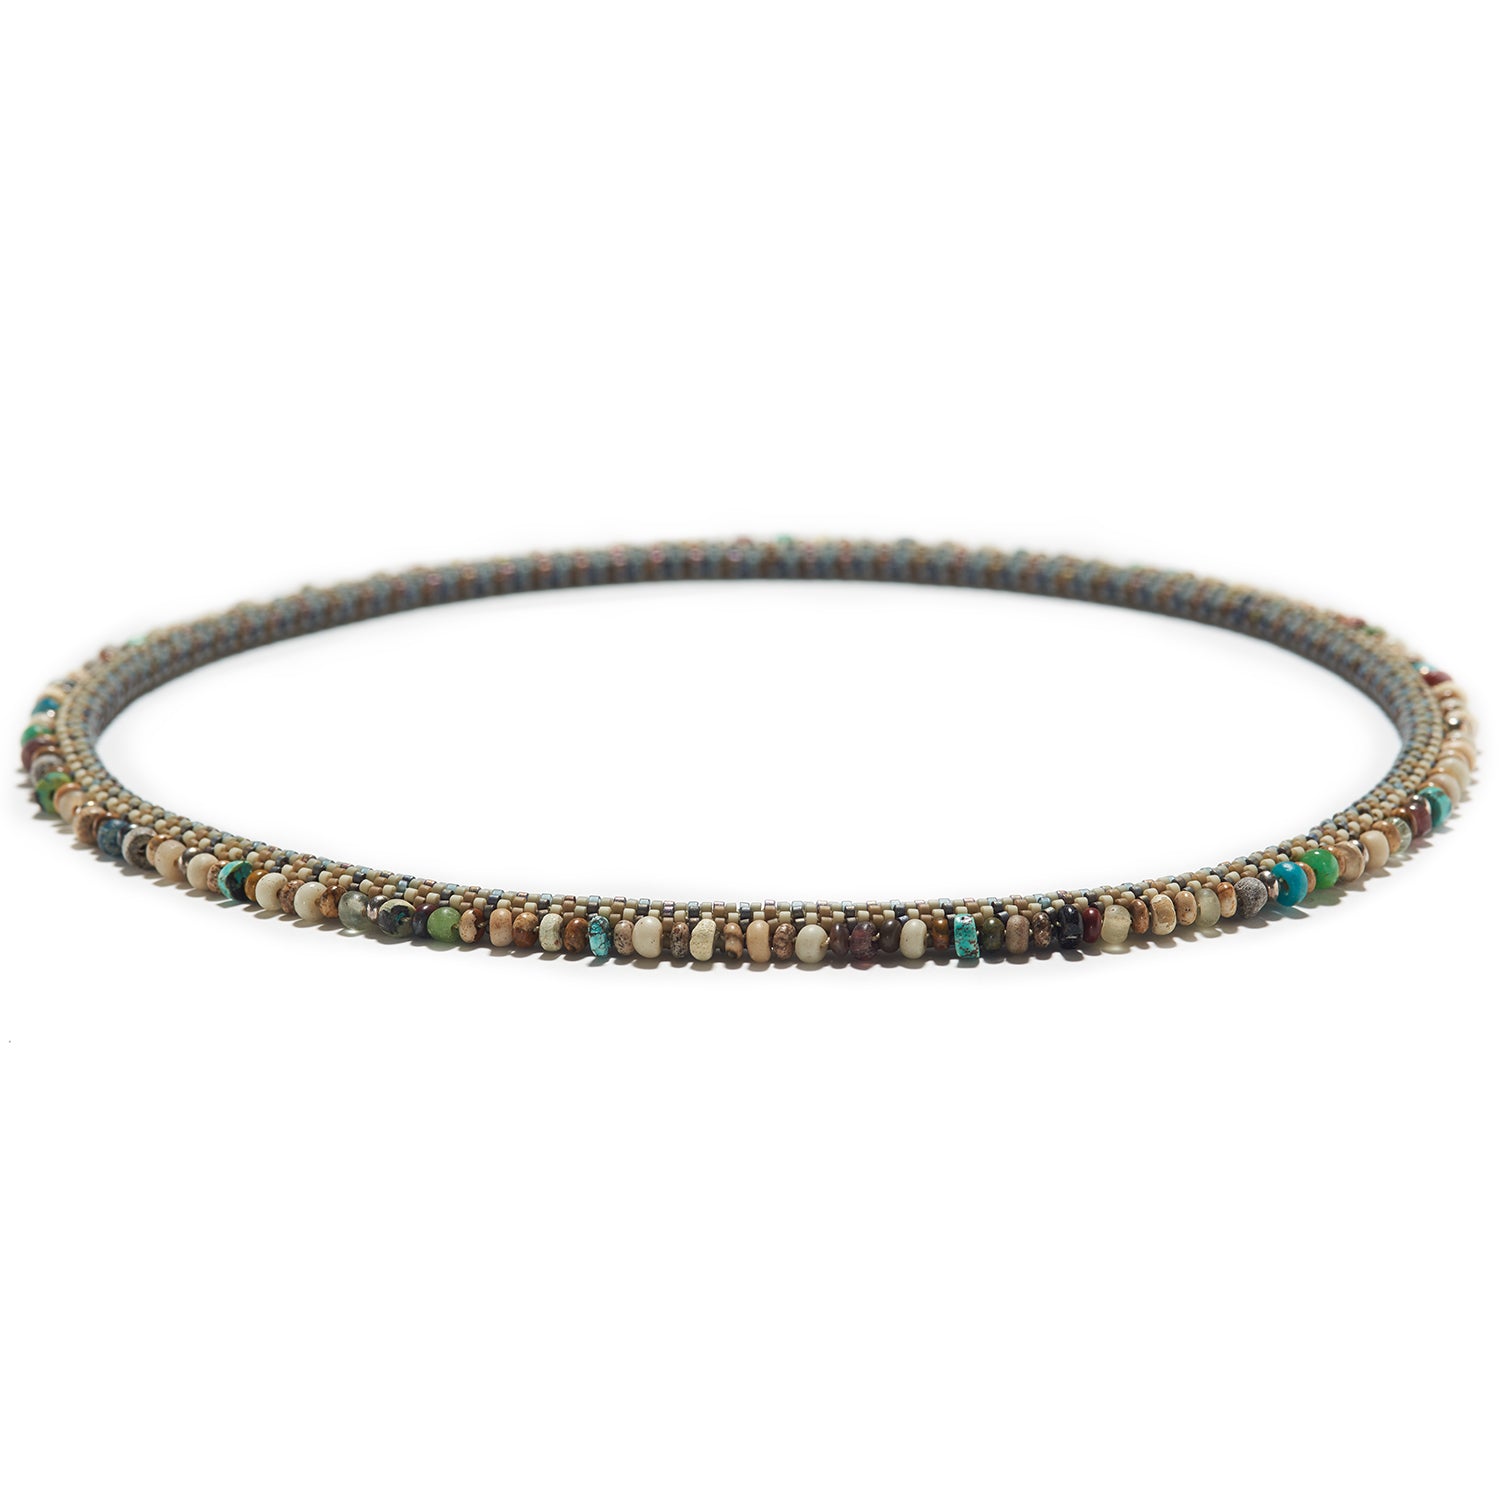 Medieval Beads Necklace/Bracelet